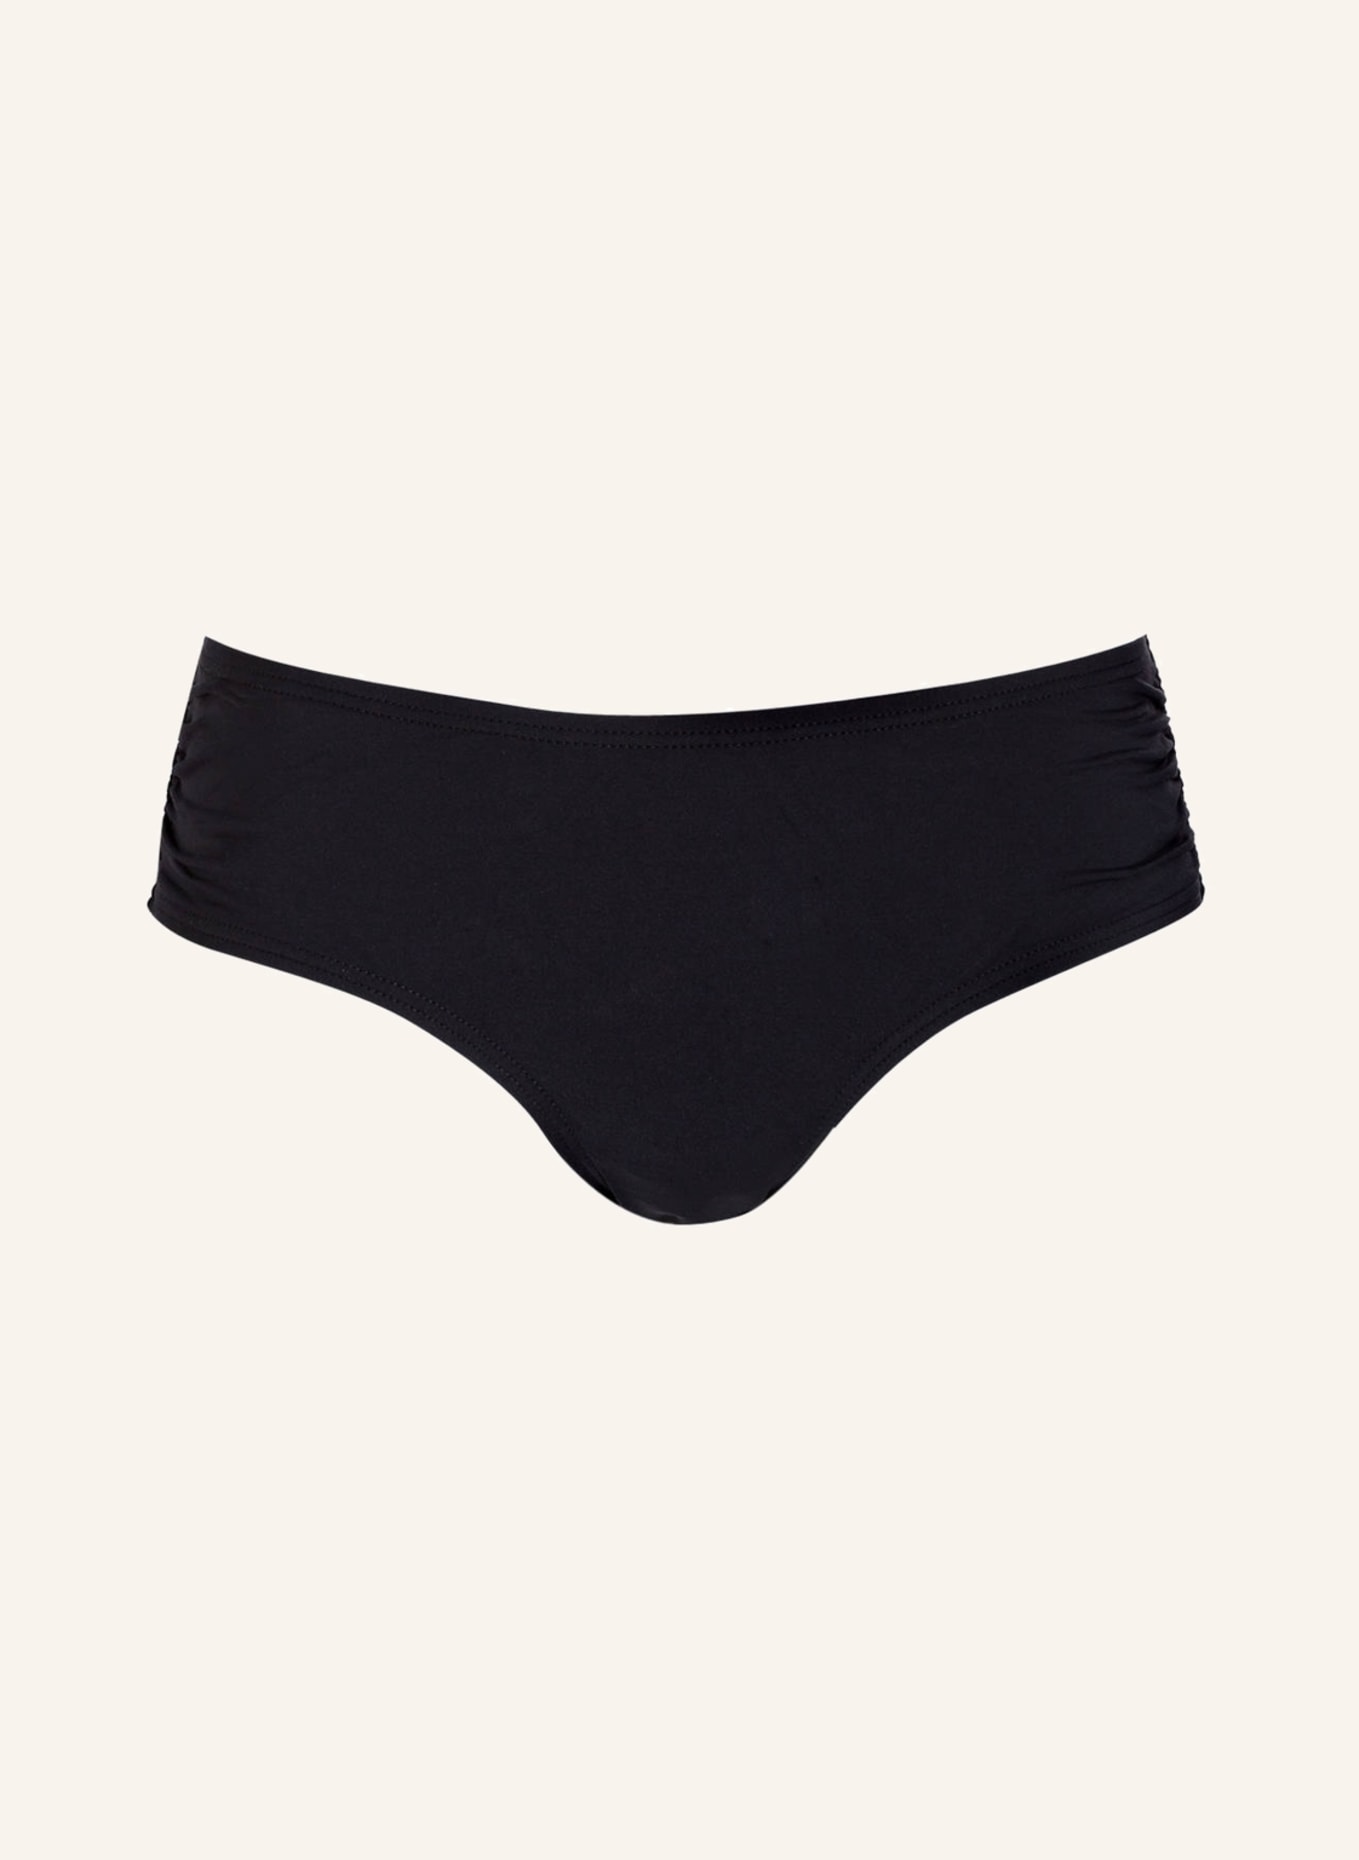 MICHAEL KORS Panty bikini bottoms ICONIC SOLIDS, Color: BLACK (Image 1)